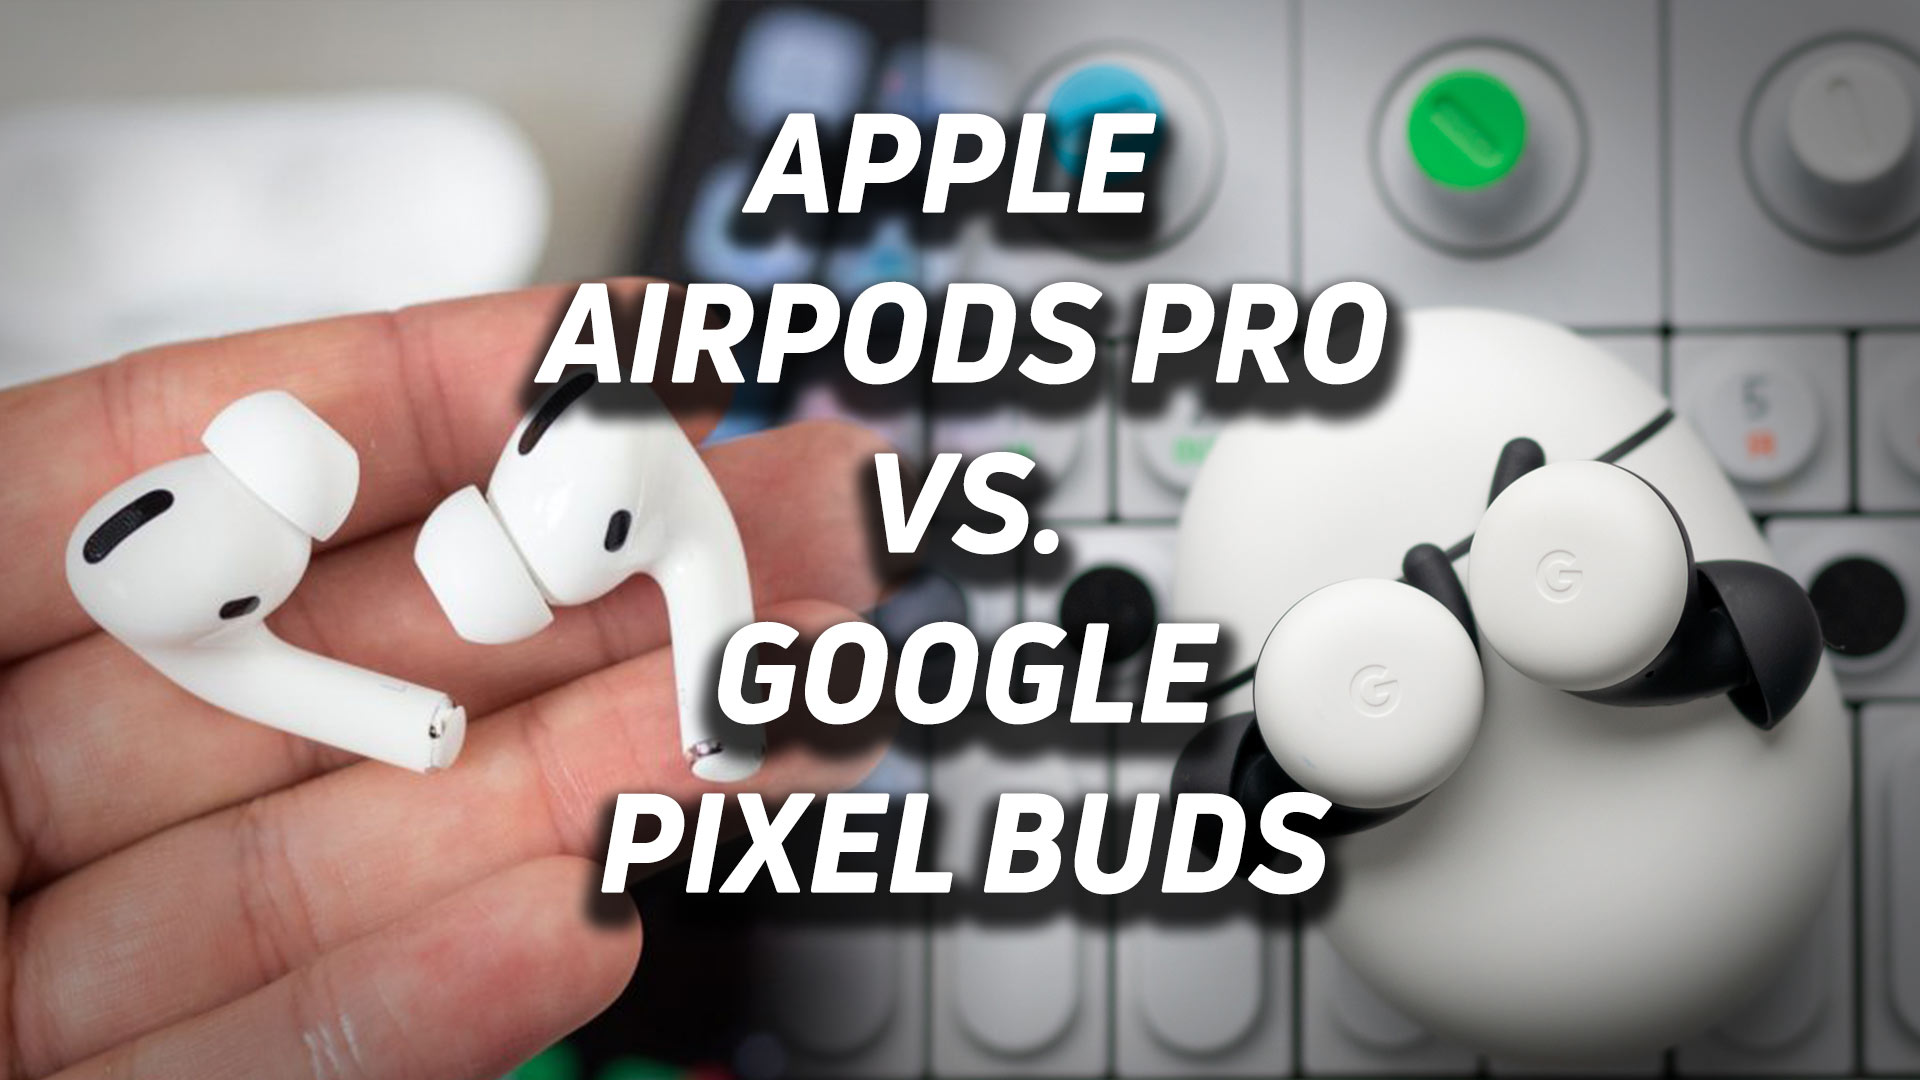 Google Pixel Buds Pro review - SoundGuys